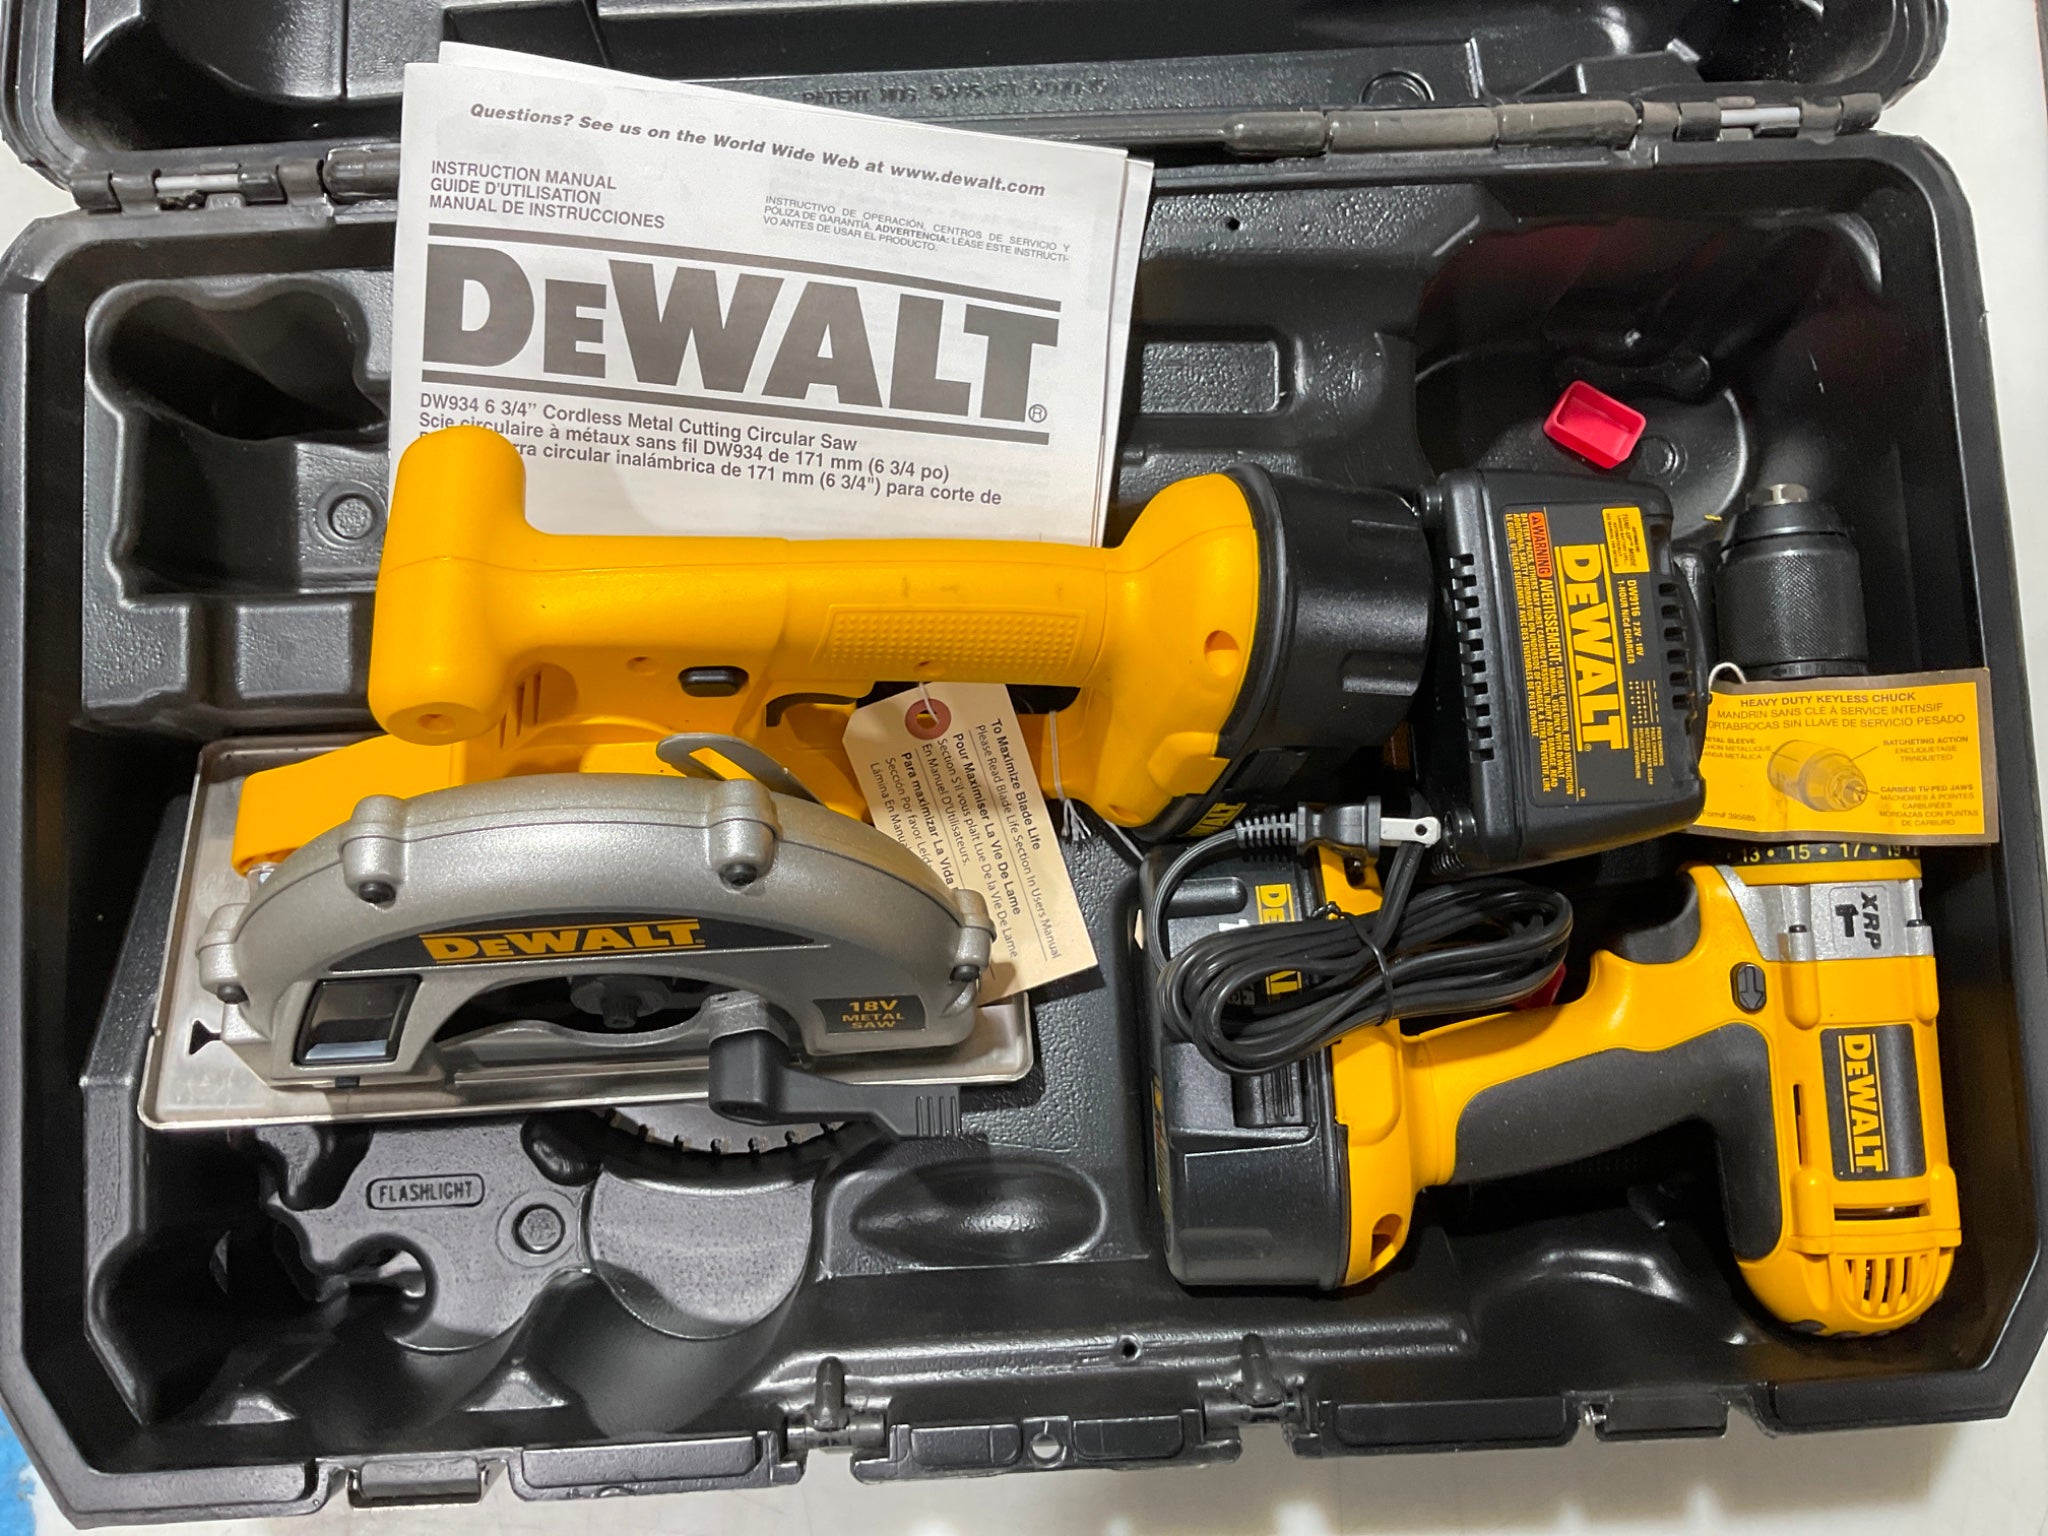 Dewalt DW988KM-2 18V Cordless Hammerdrill/Drill/Driver & Circular Saw #23